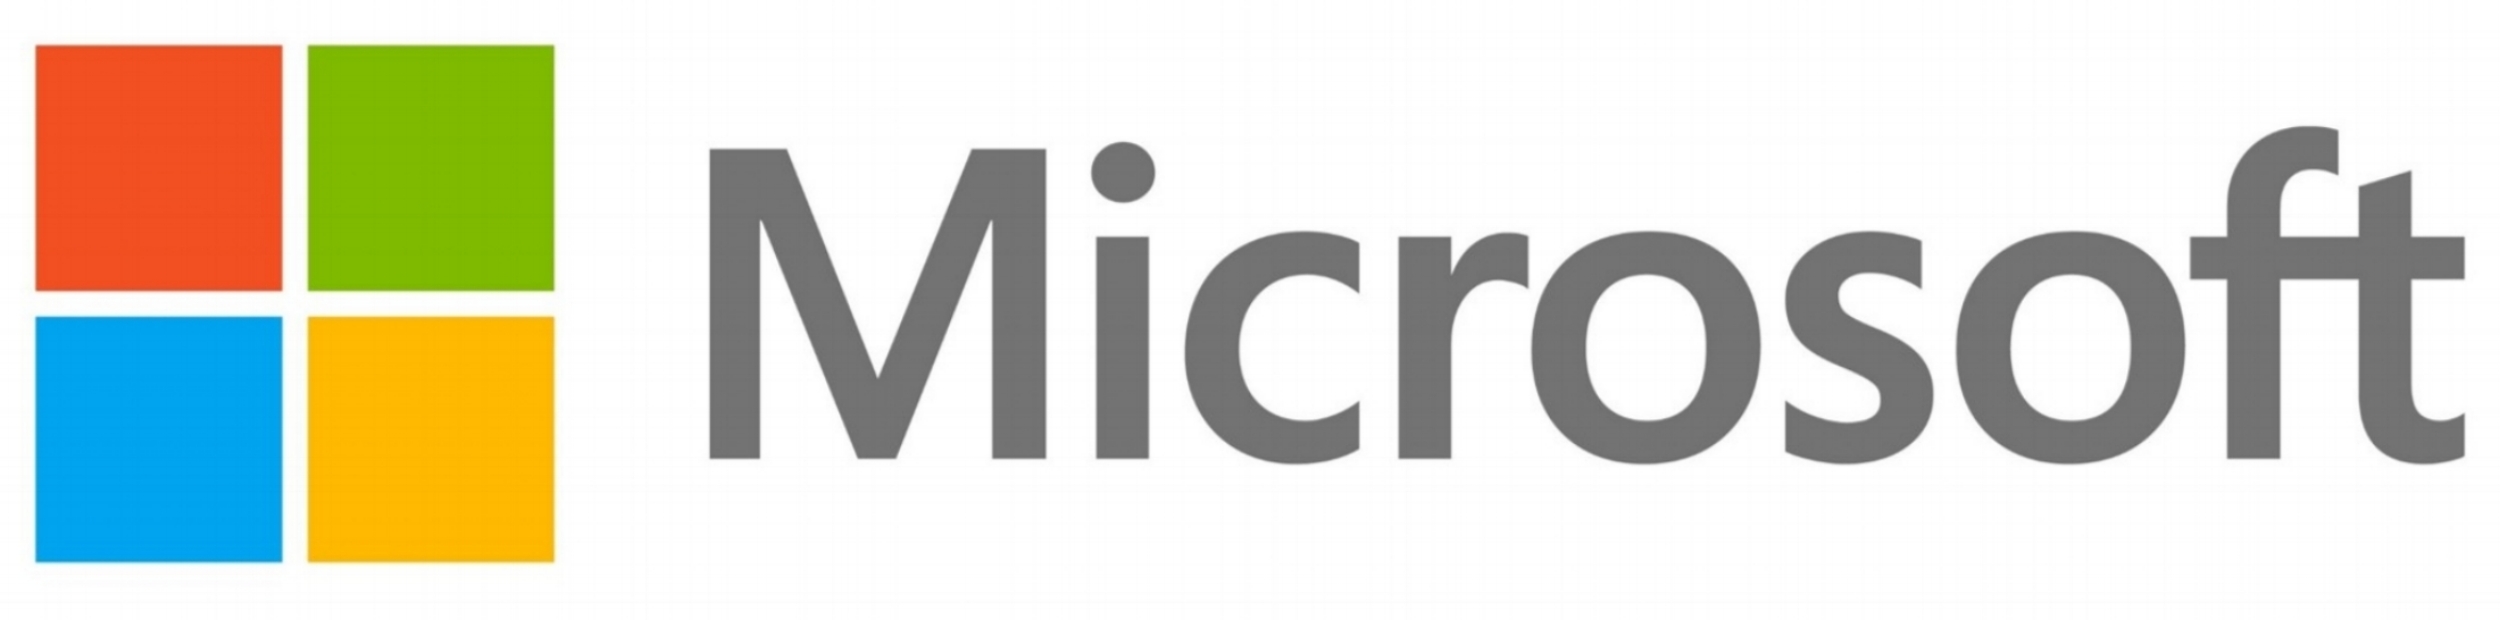 Microsoft_5F00_Logo.jpg